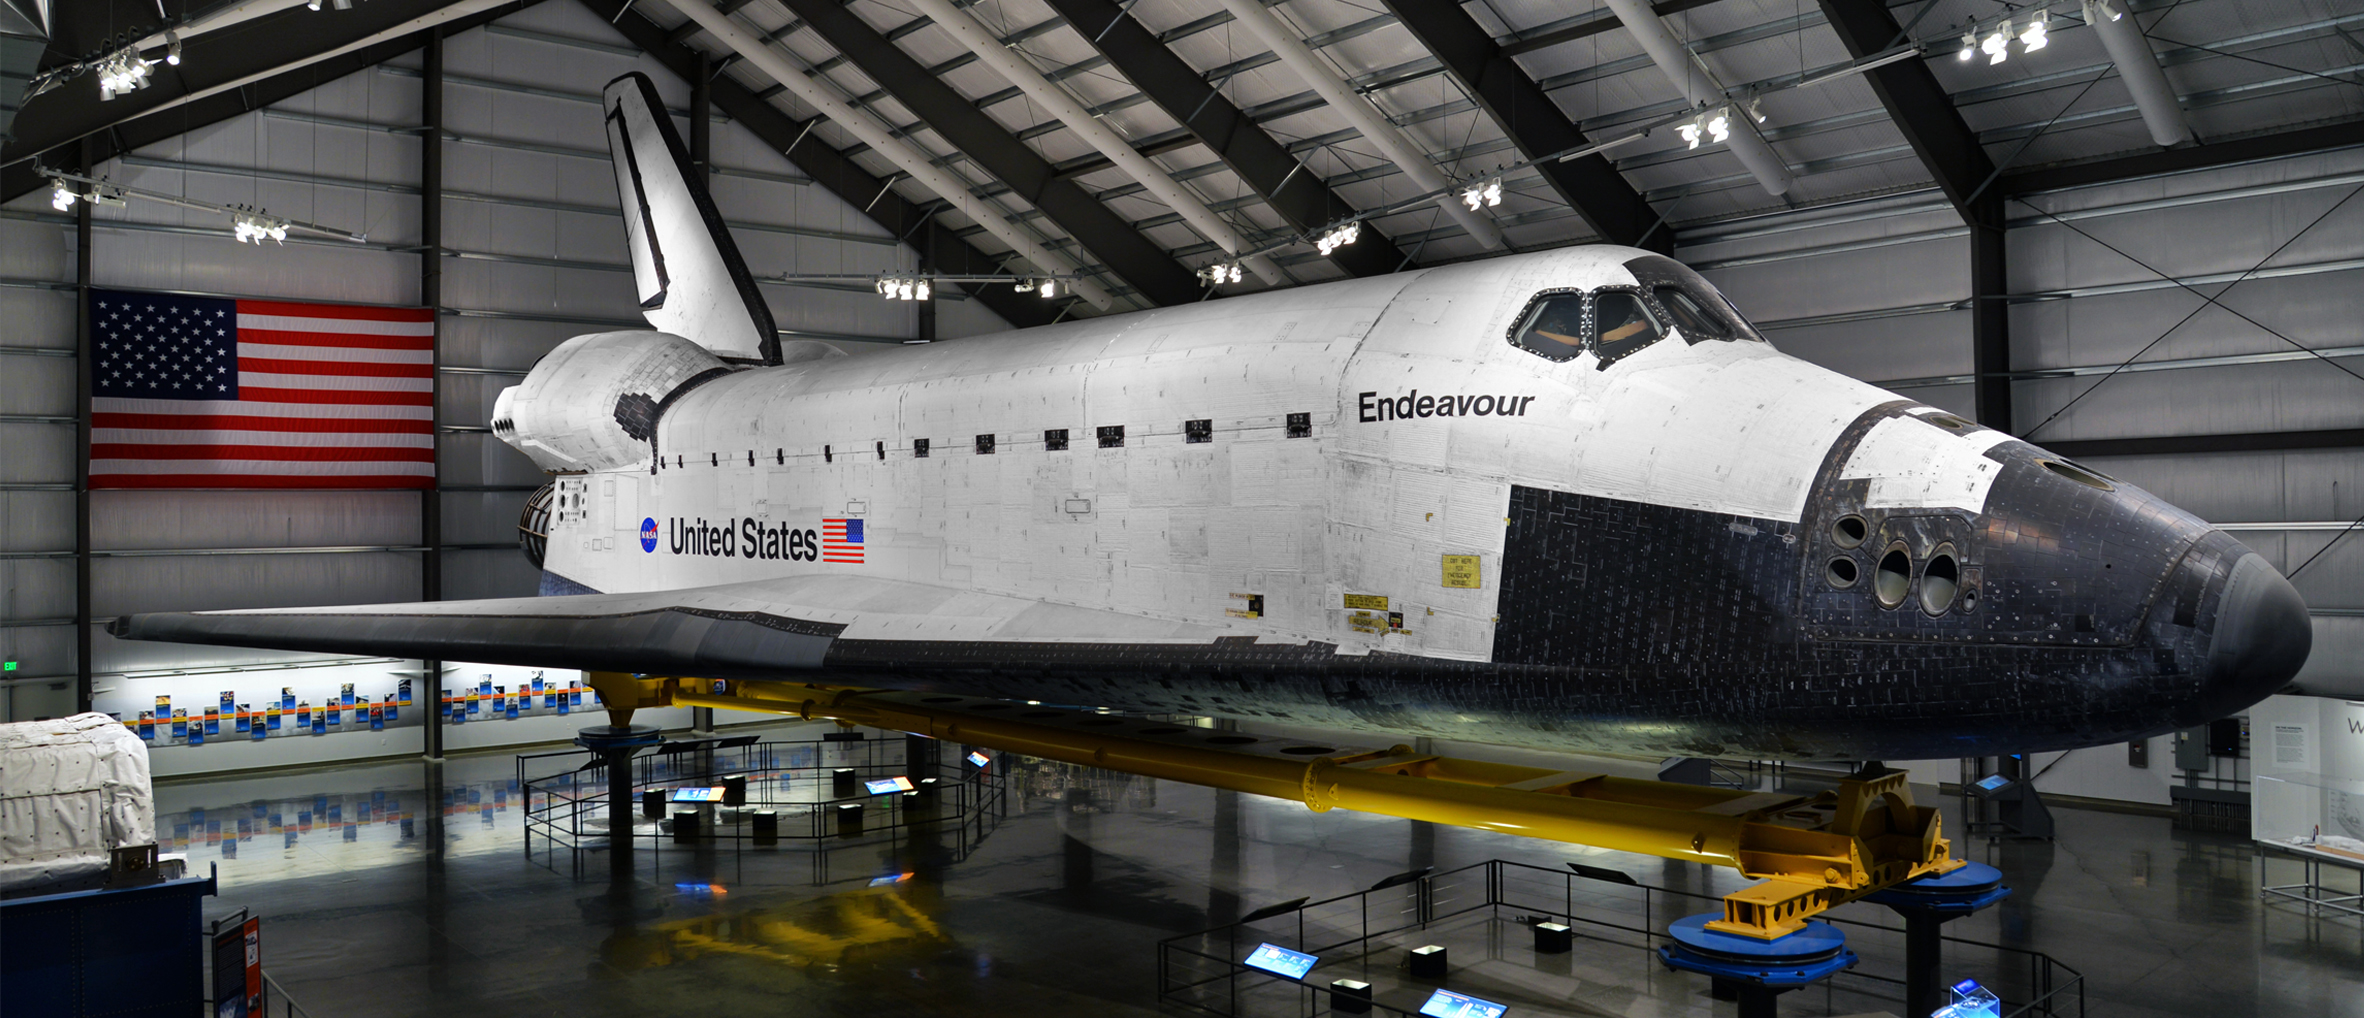 Space shuttle Endeavour in the Samuel Oschin Pavilion